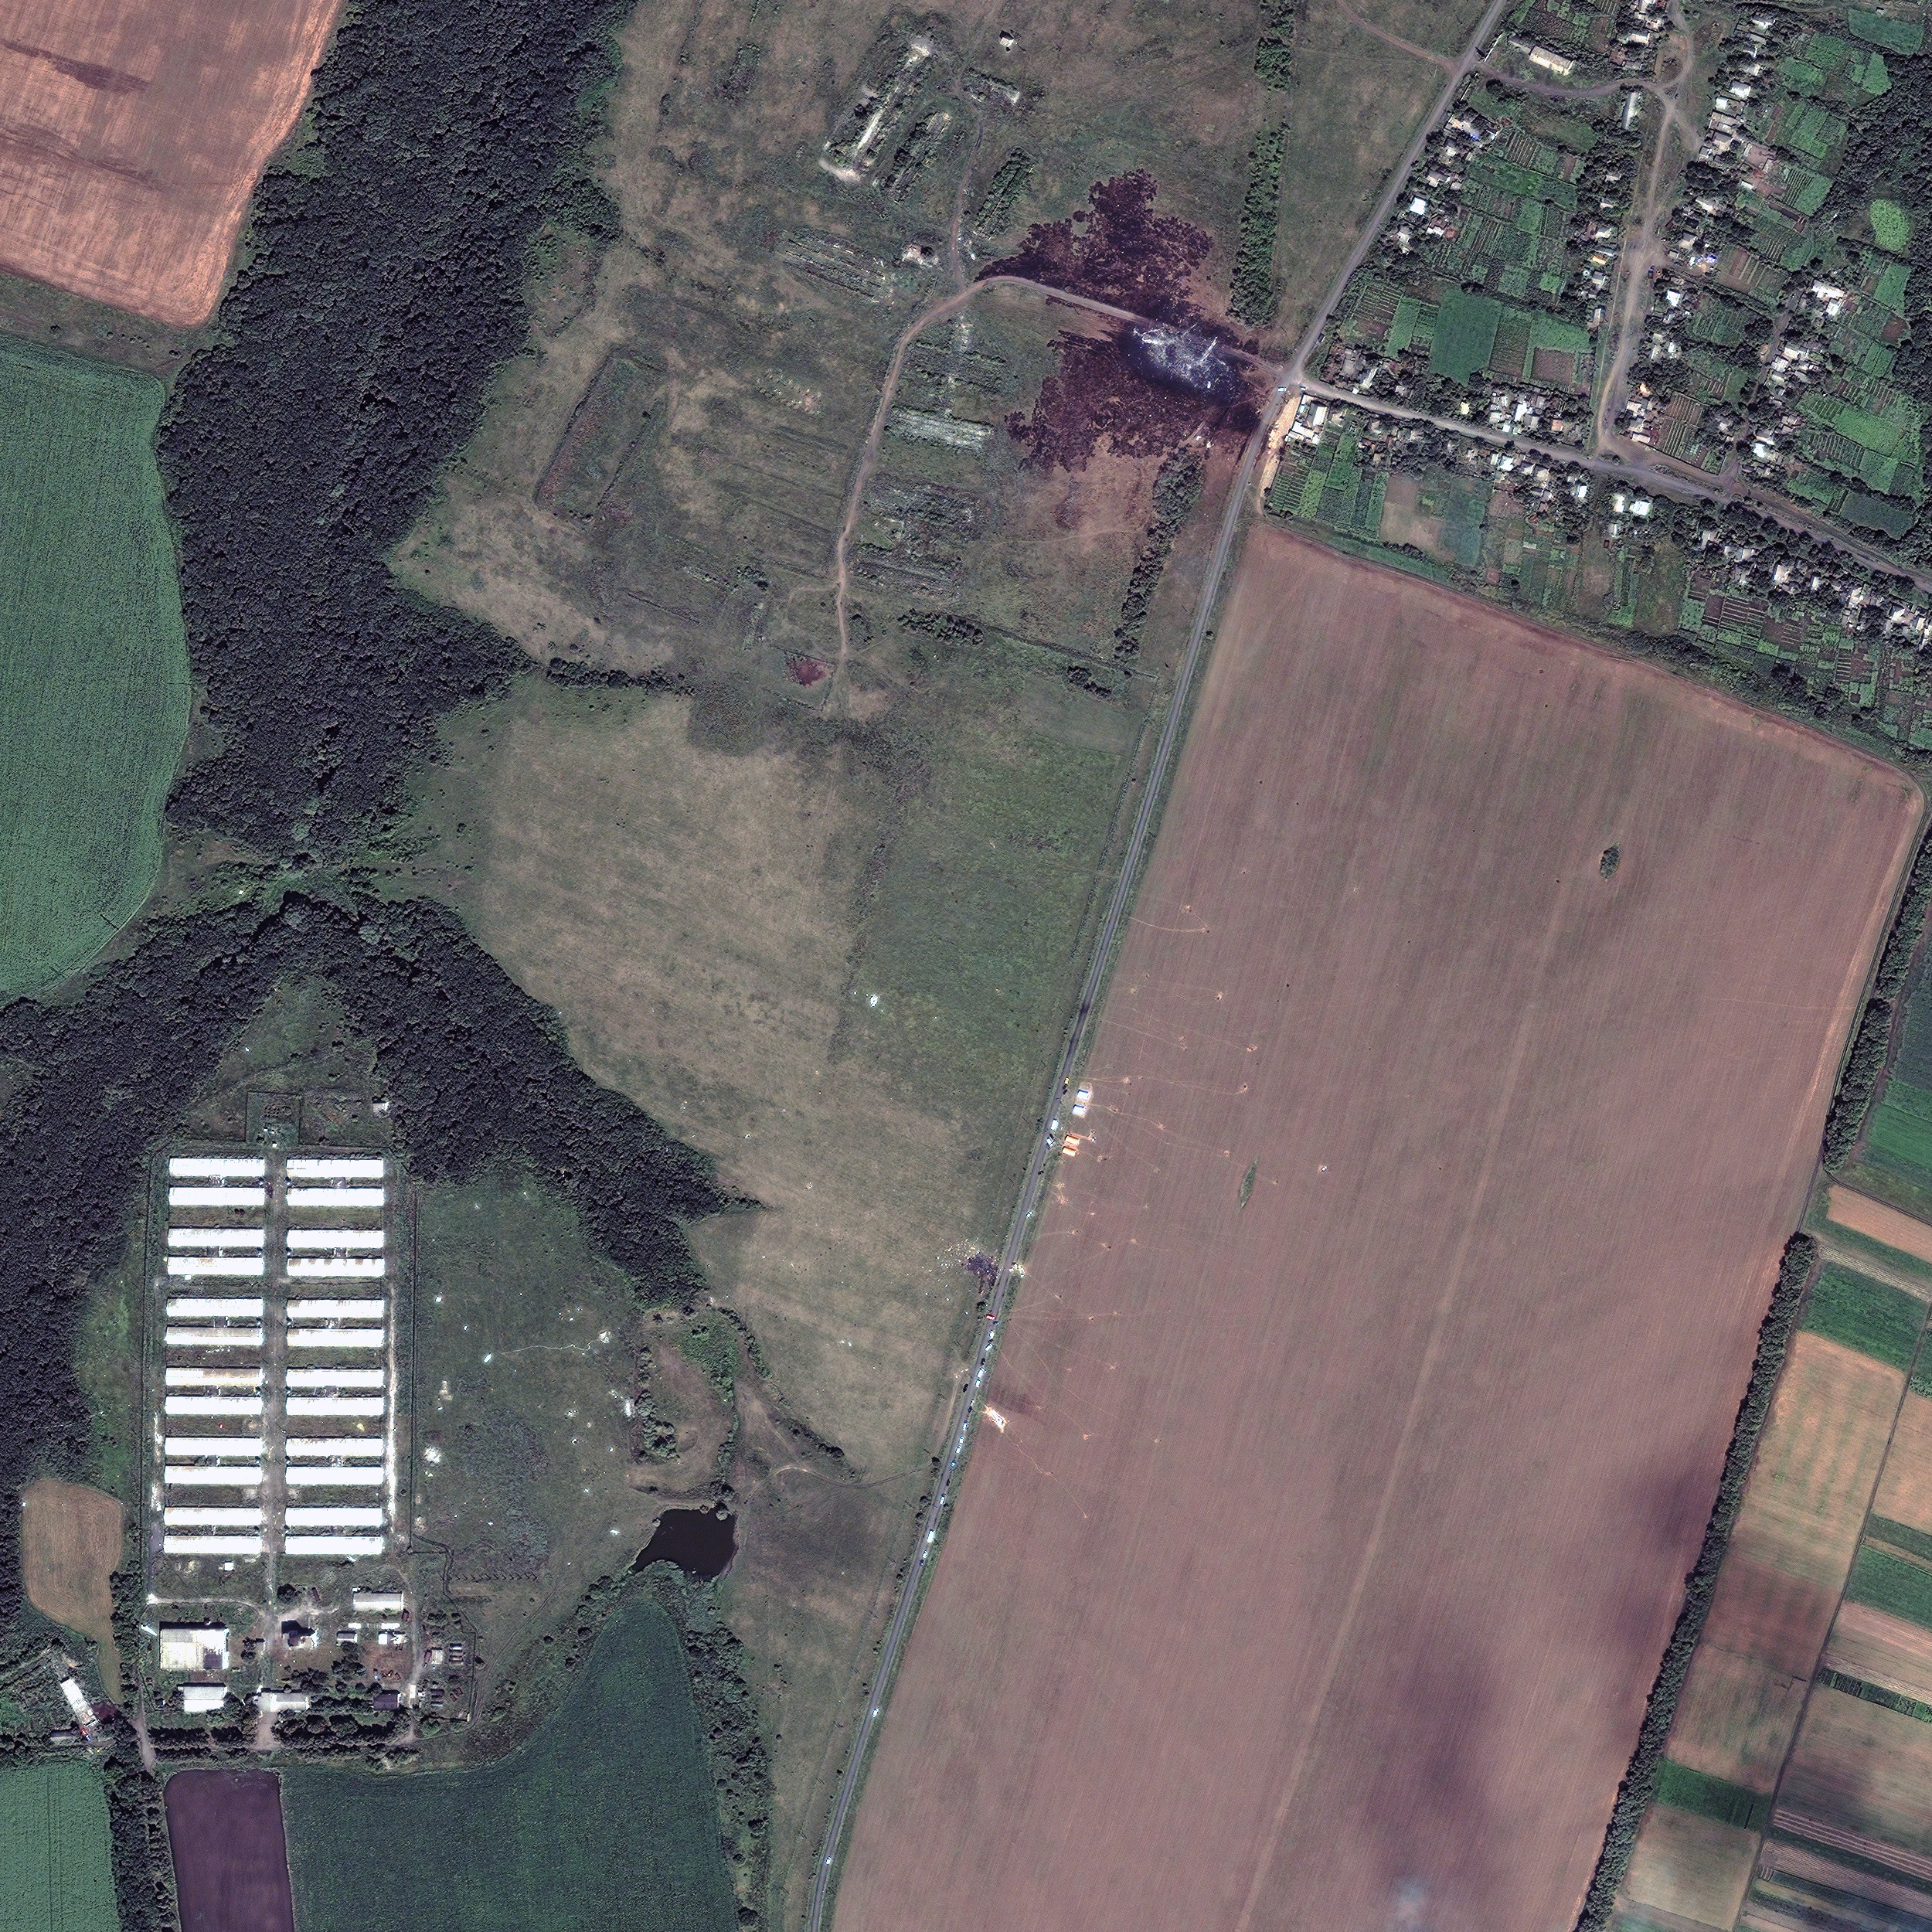 Satellietfoto's rampplek MH17